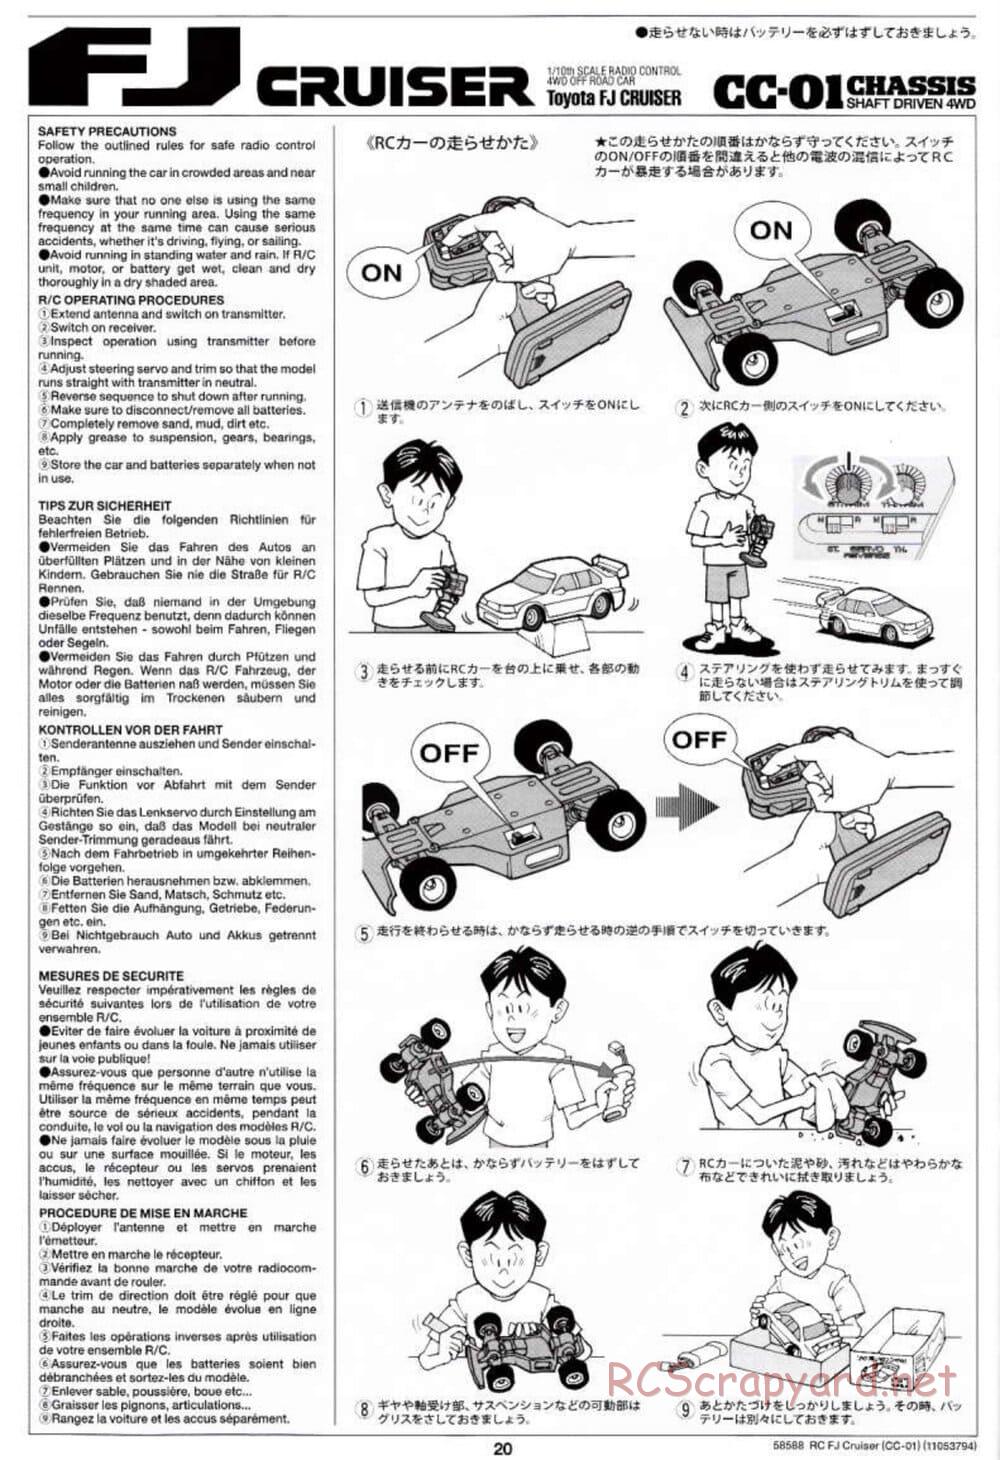 Tamiya - Toyota FJ Cruiser - CC-01 Chassis - Manual - Page 20